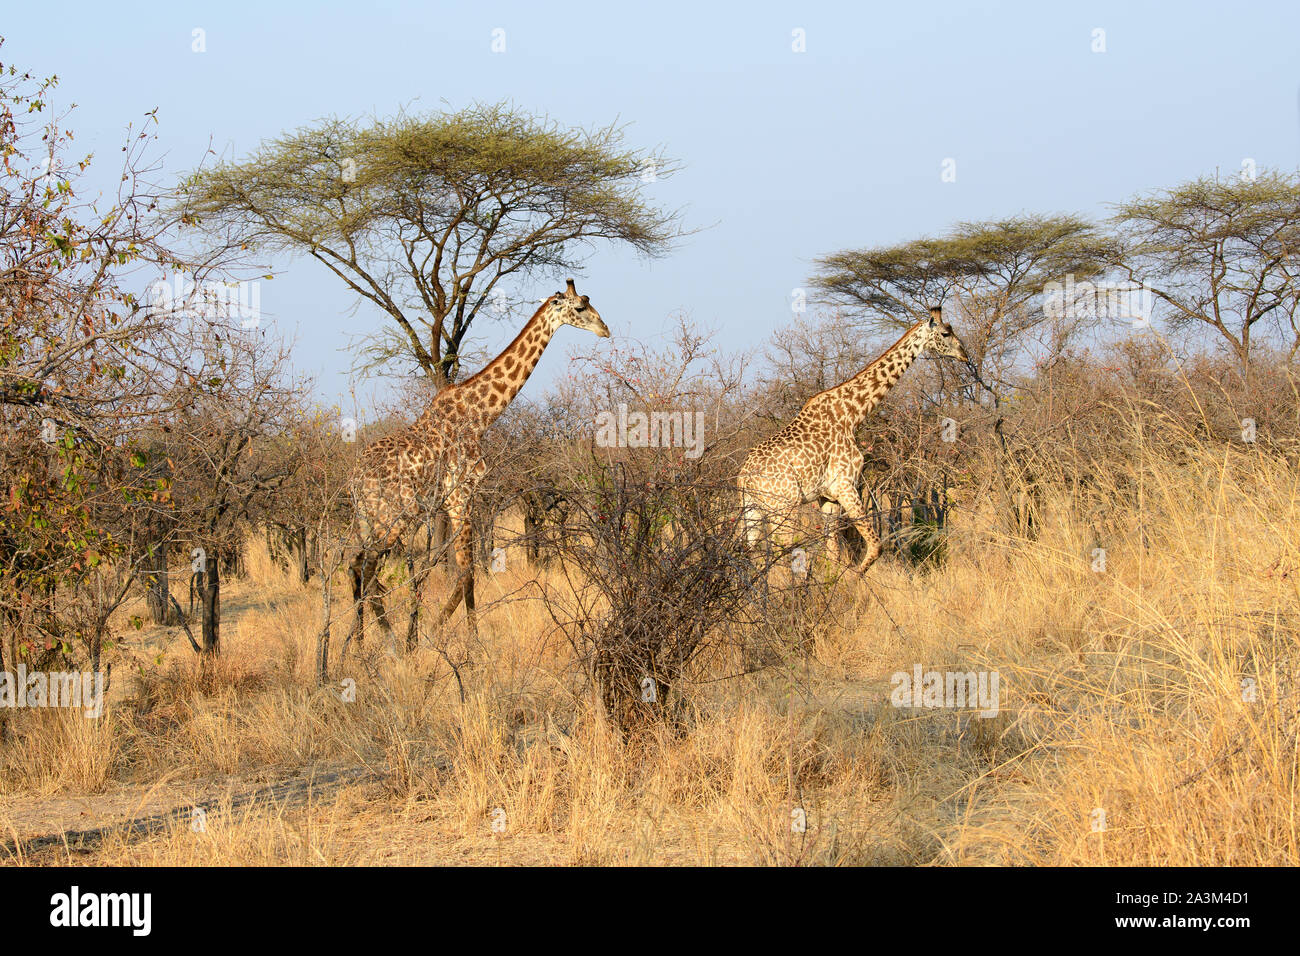 Giraffes ambling through the African bush Stock Photo